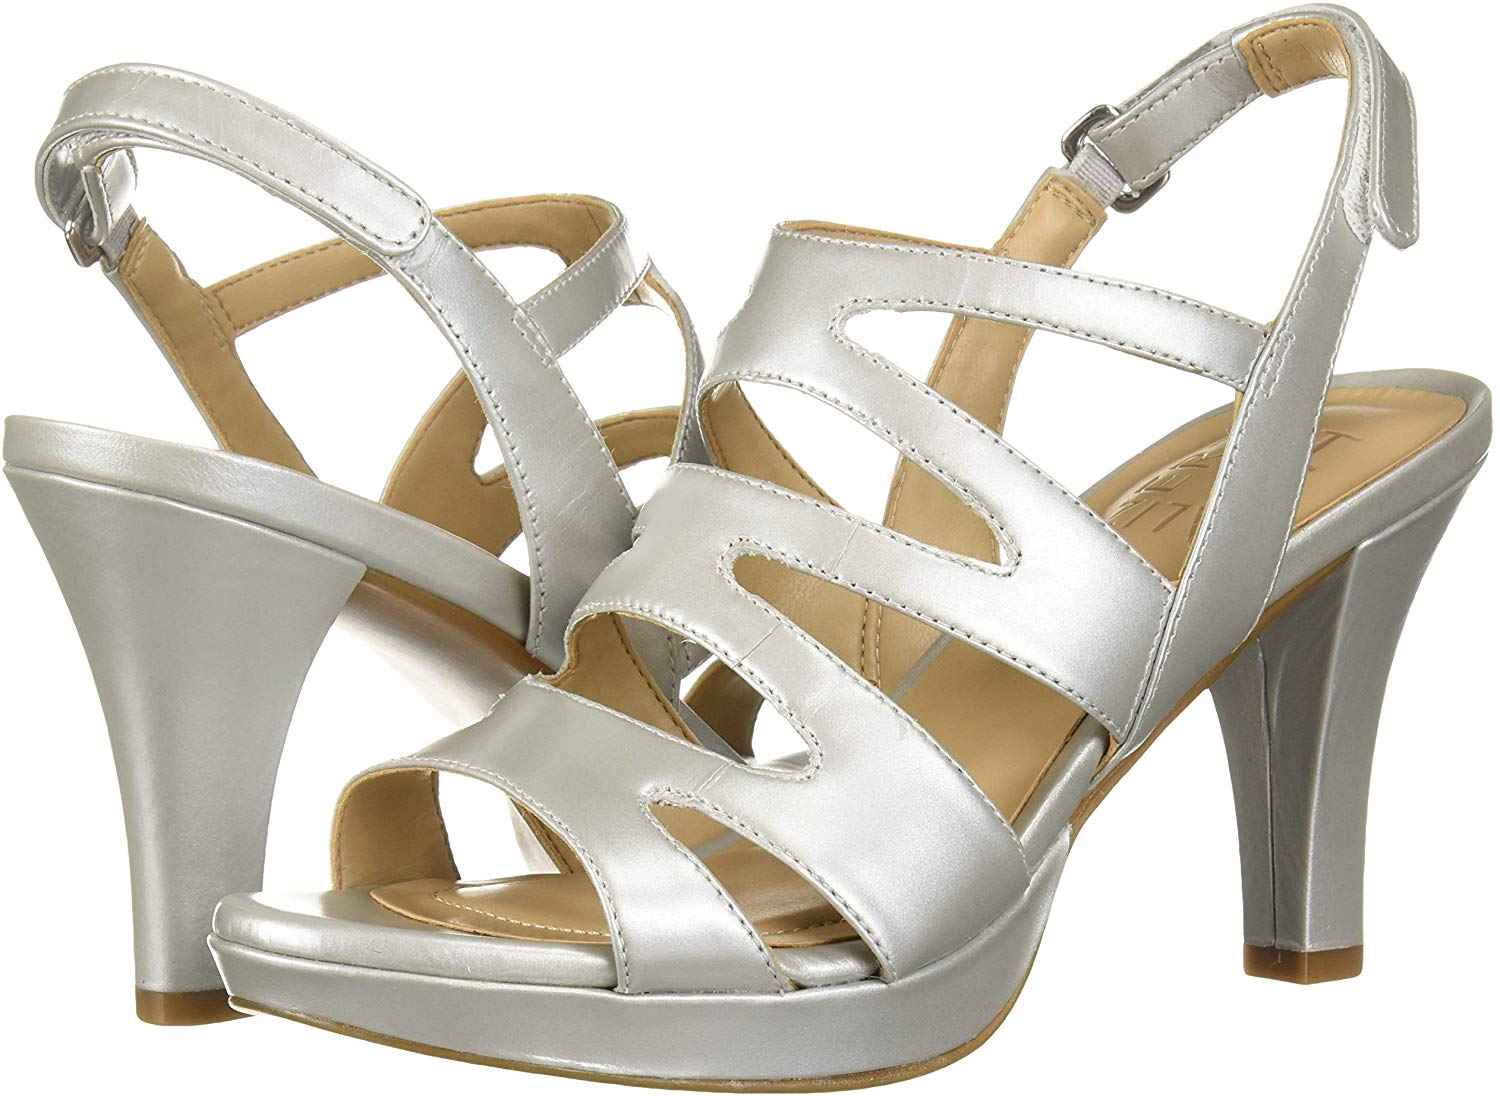 Naturalizer Womens Heeled Sandals in Silver Color, Size 7 EKP | eBay